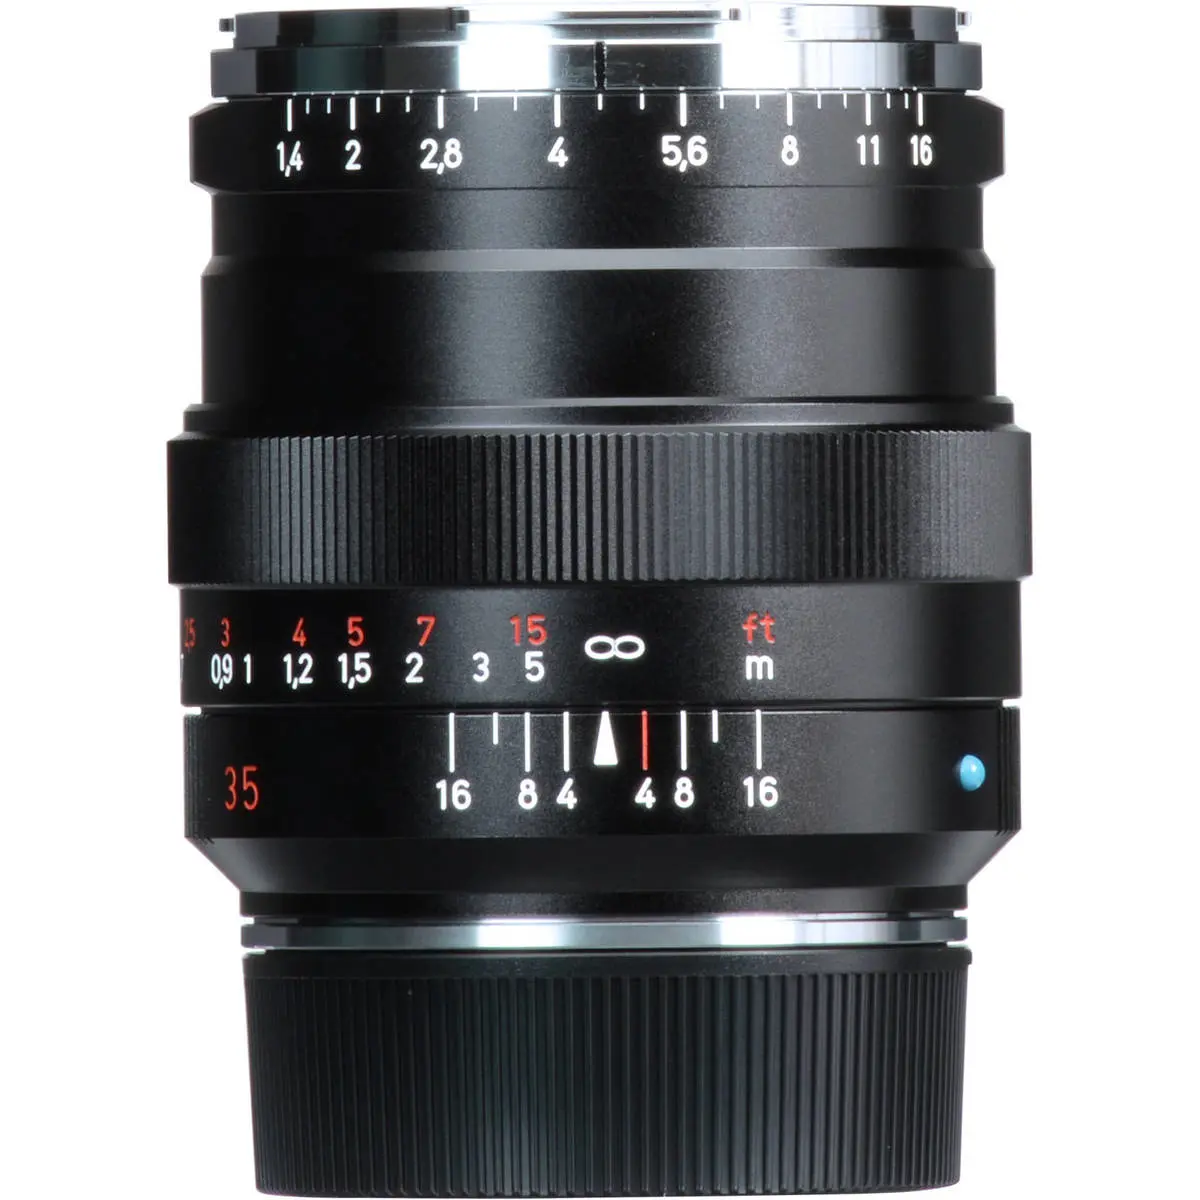 6. Carl Zeiss Distagon T* 35mm f/1.4 ZM Lens (Black) Lens